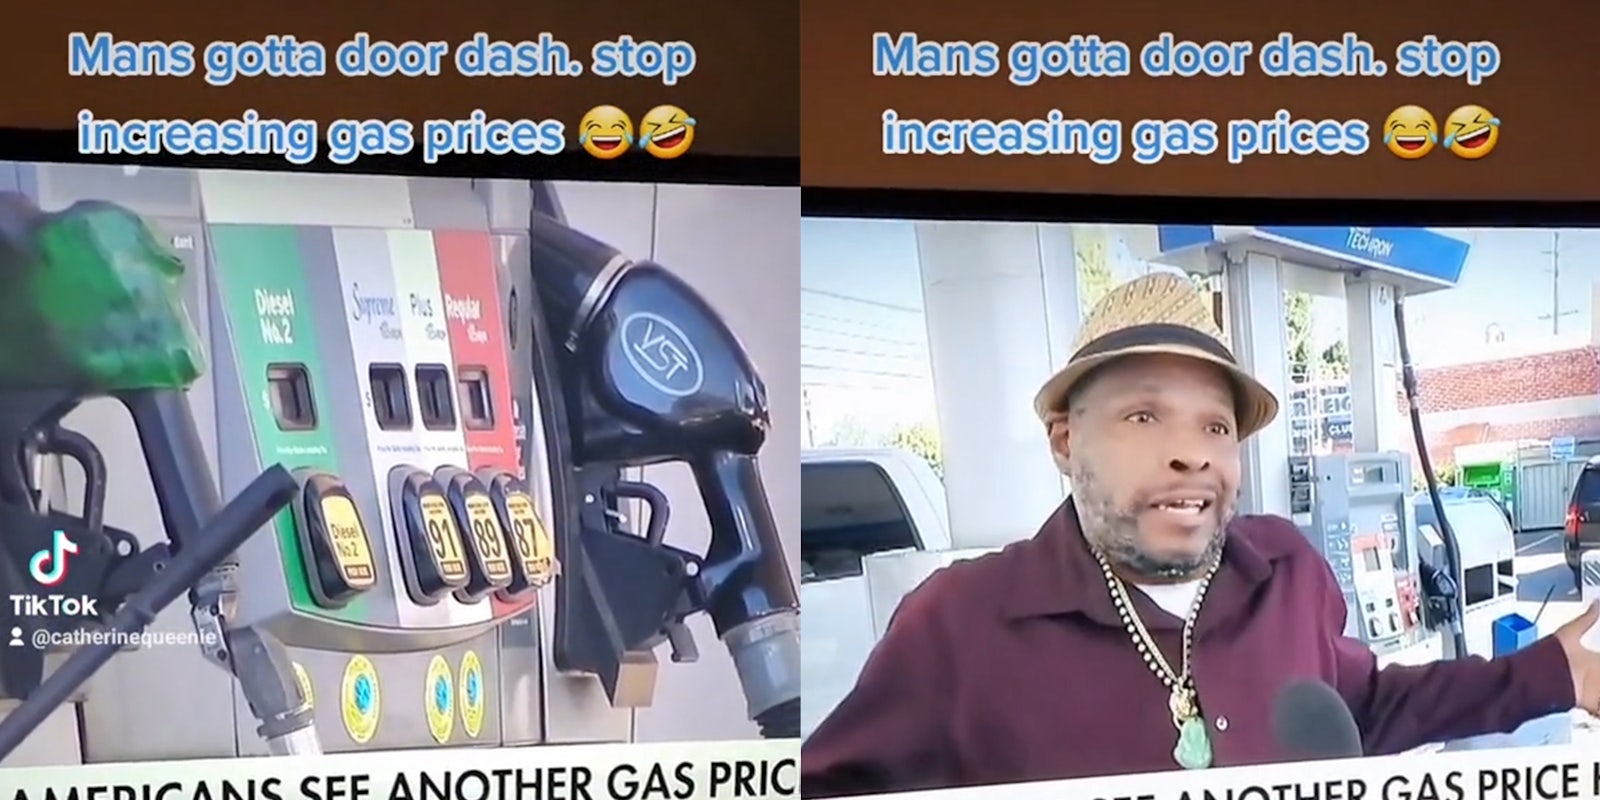 gas pump (l) man shrugging shoulders (r) both with caption 'Mans gotta door dash. stop increasing gas prices'